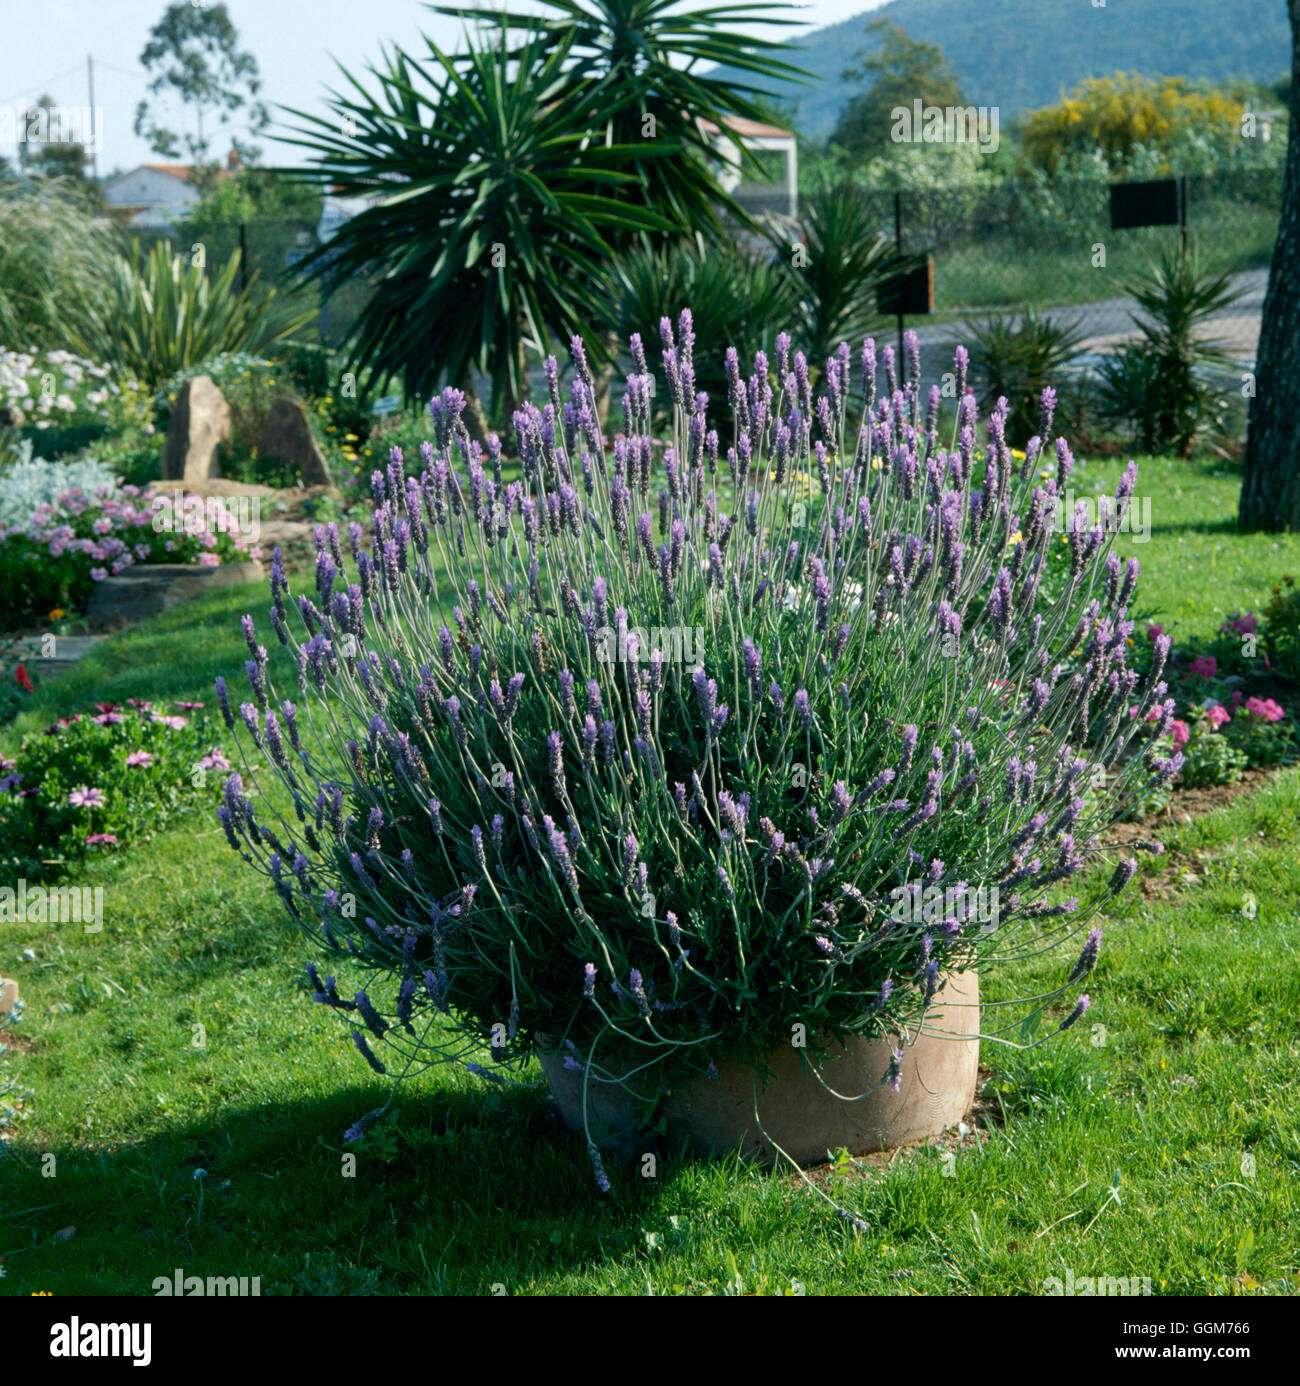 Lavandula Pinnata Lavender High Resolution Stock Photography And Images Alamy